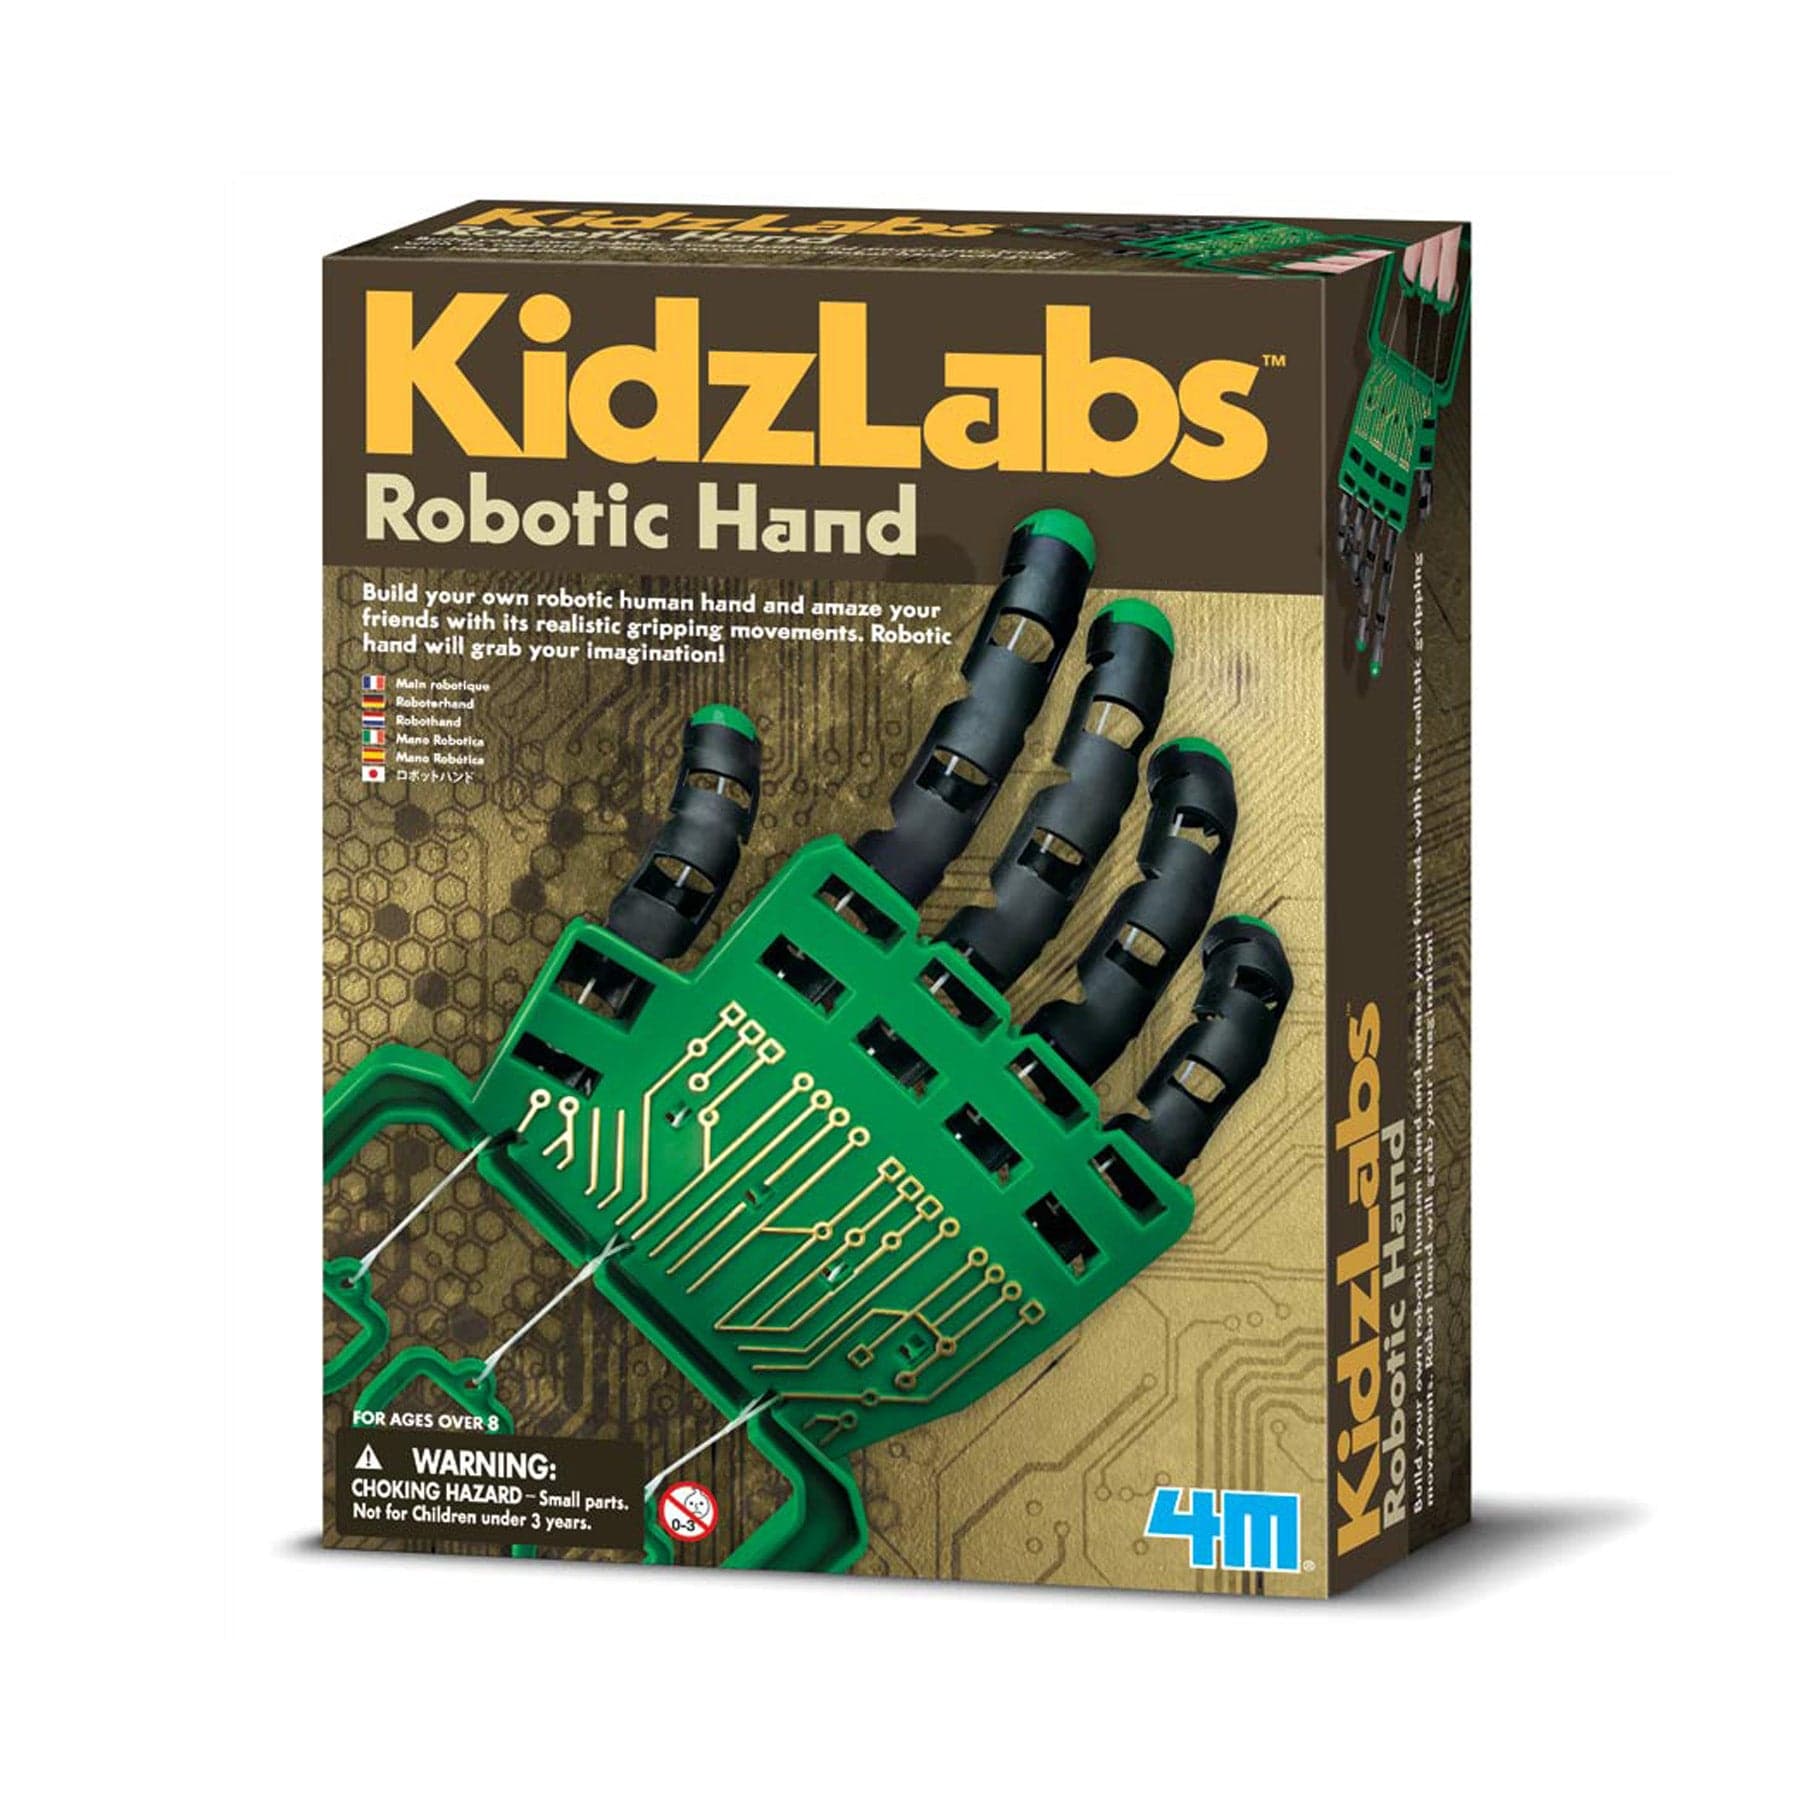 Robotic hand science kit